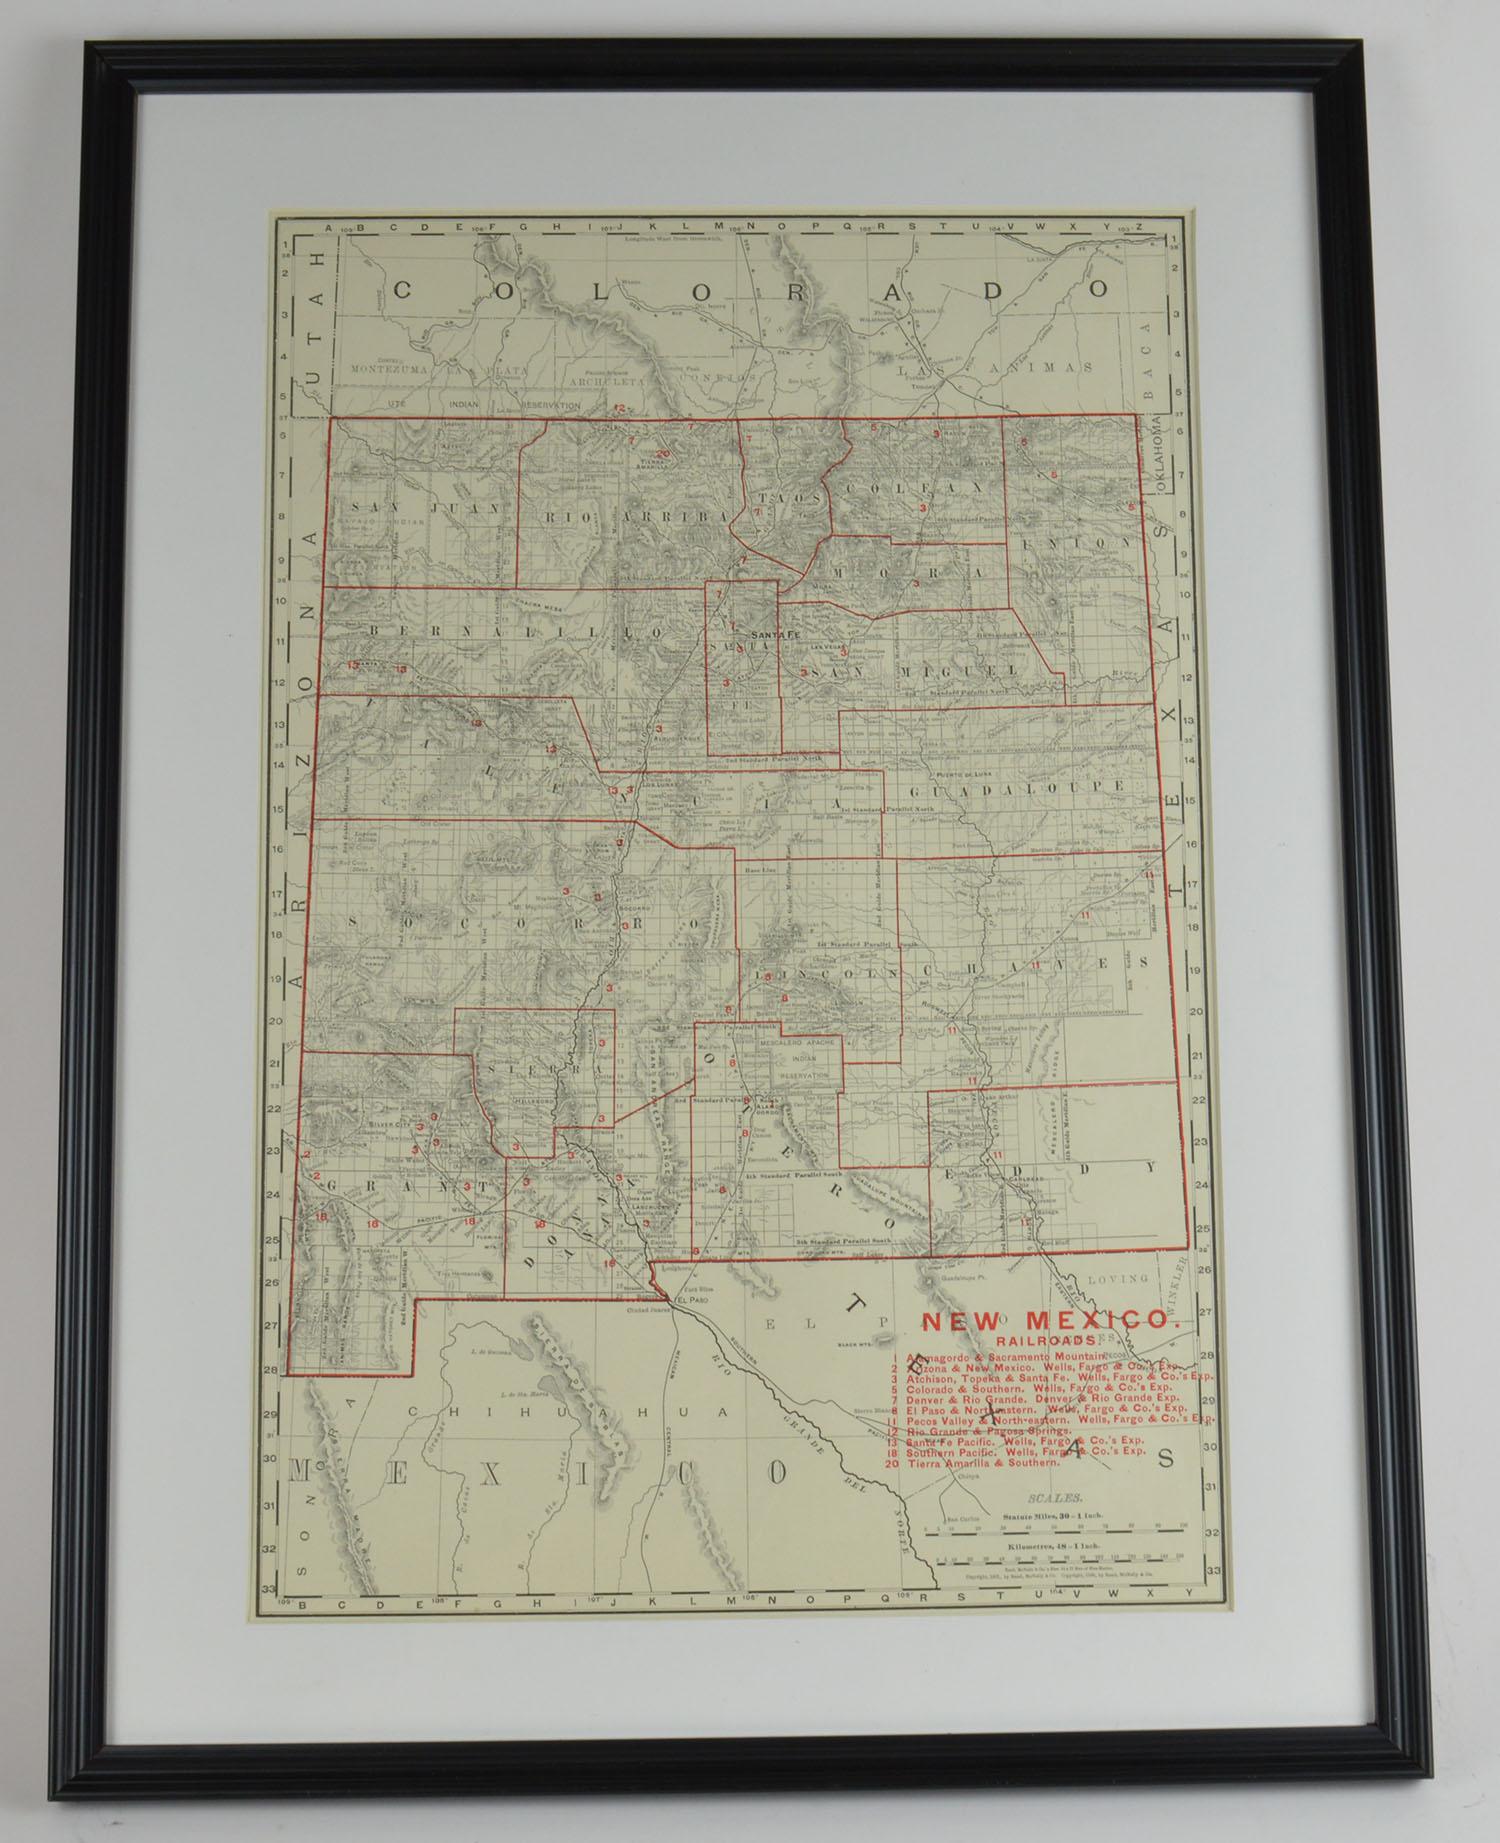 Paper Set of 6 Original Vintage Maps of American States, circa 1900